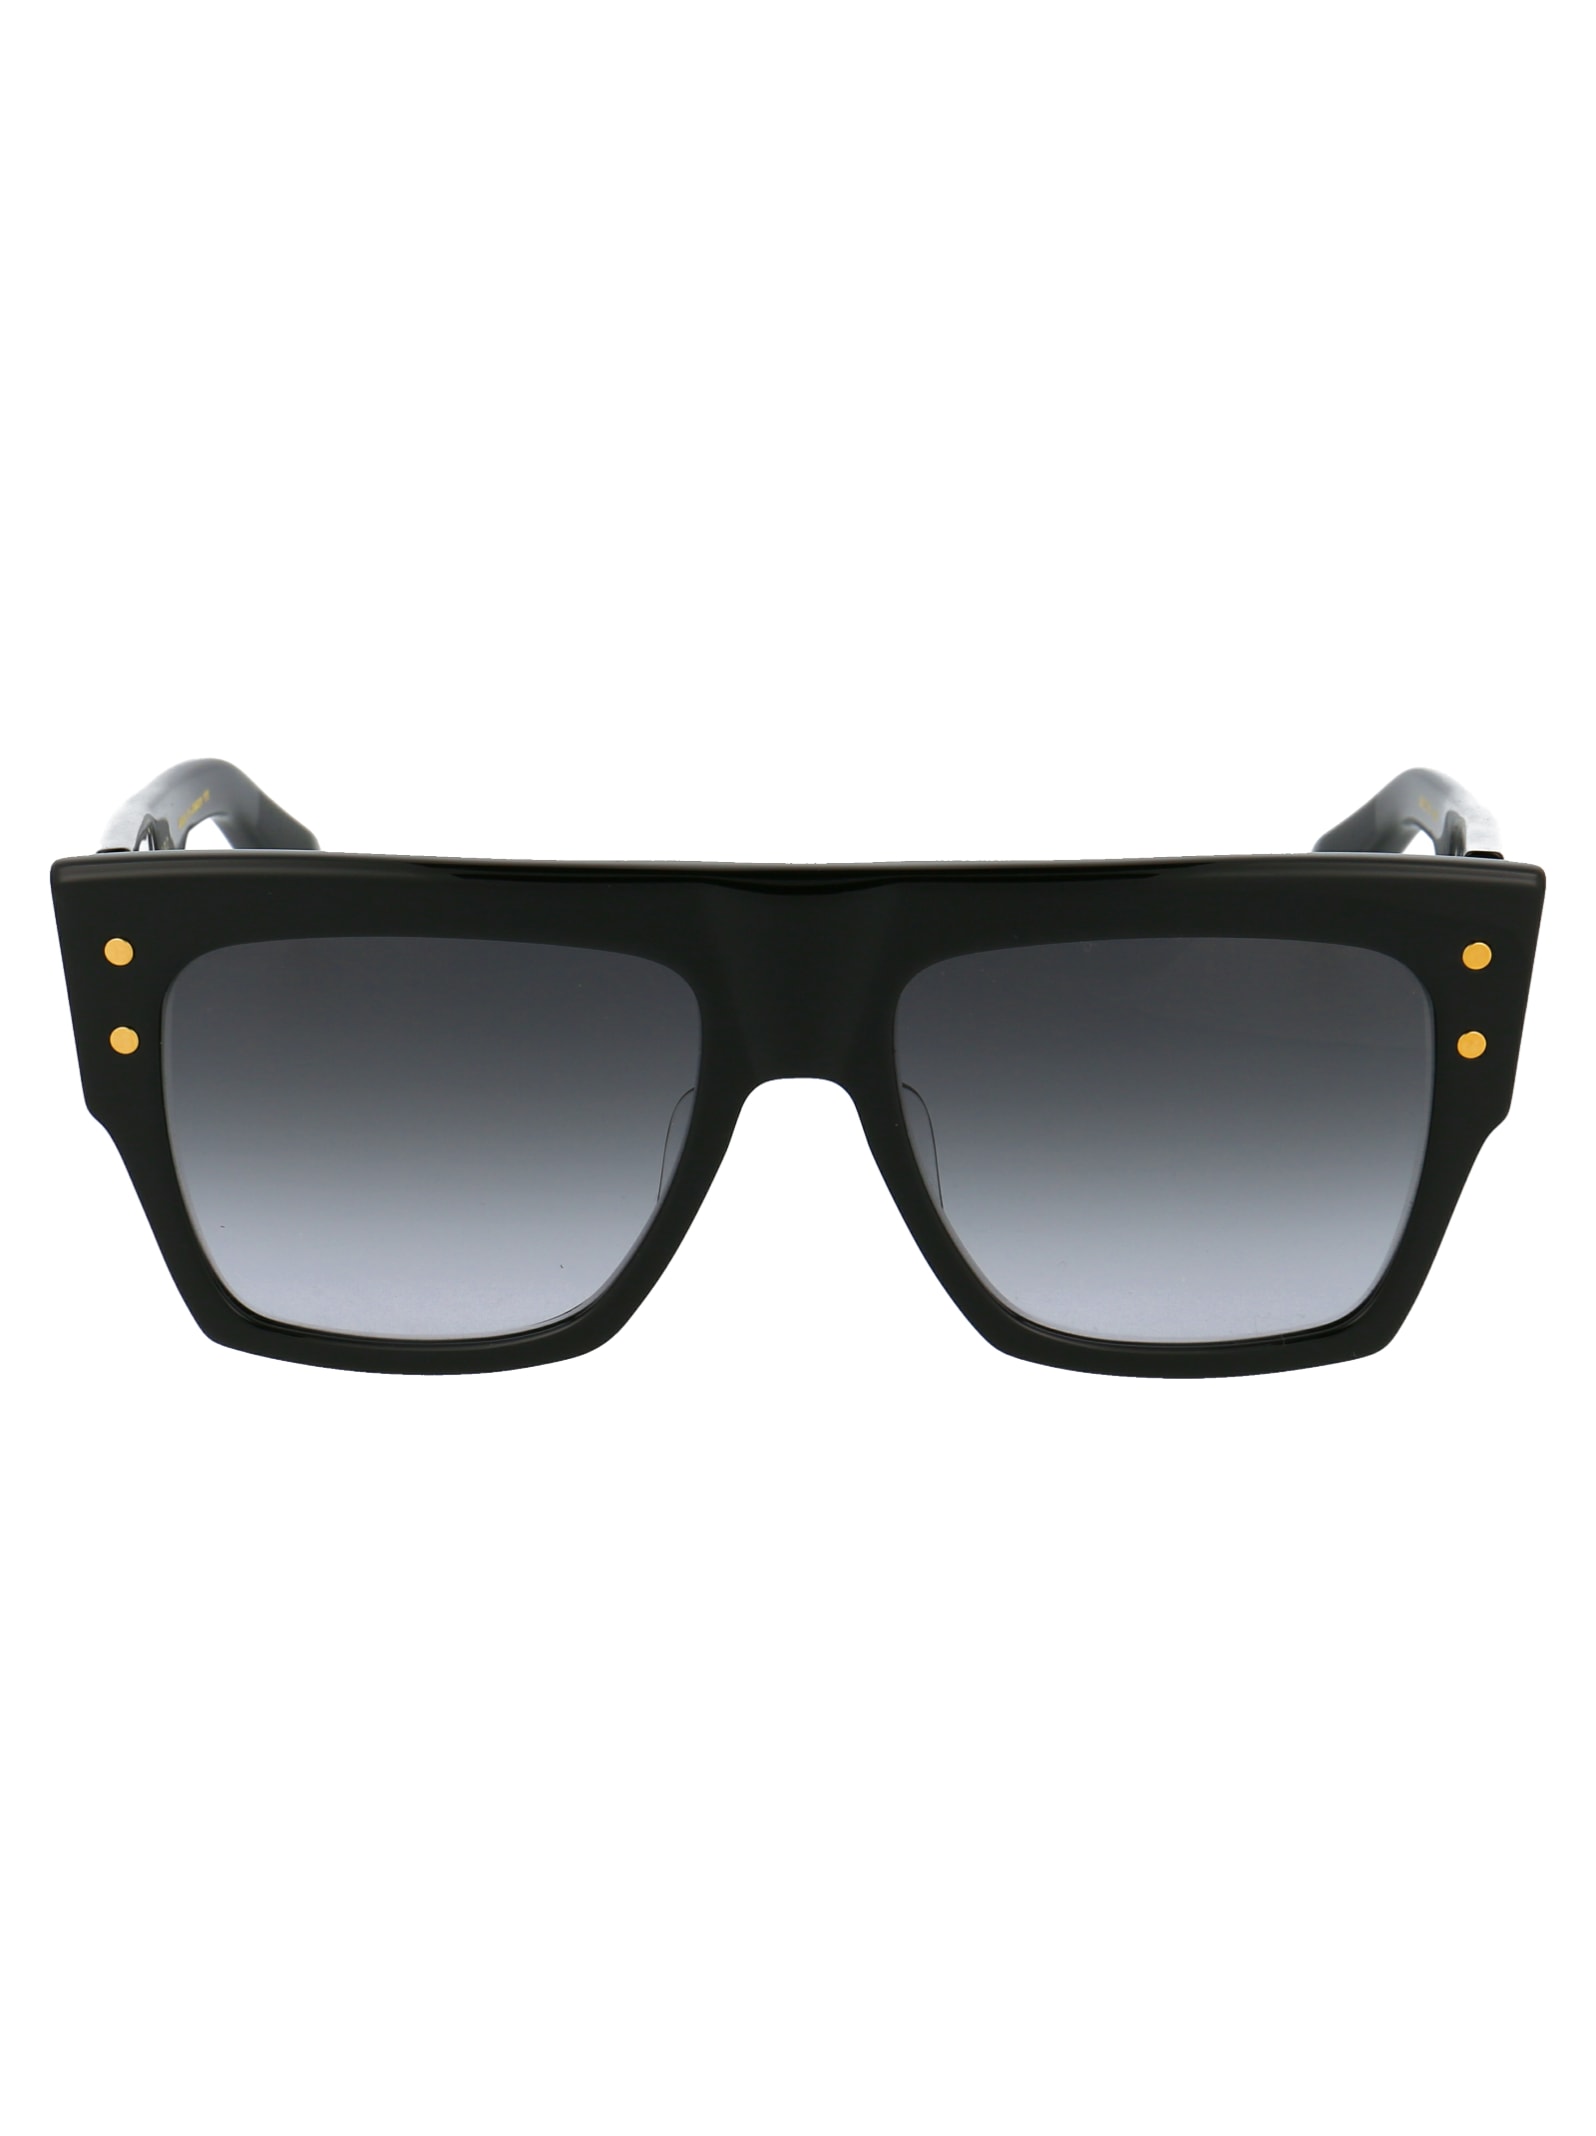 Balmain B - I Sunglasses